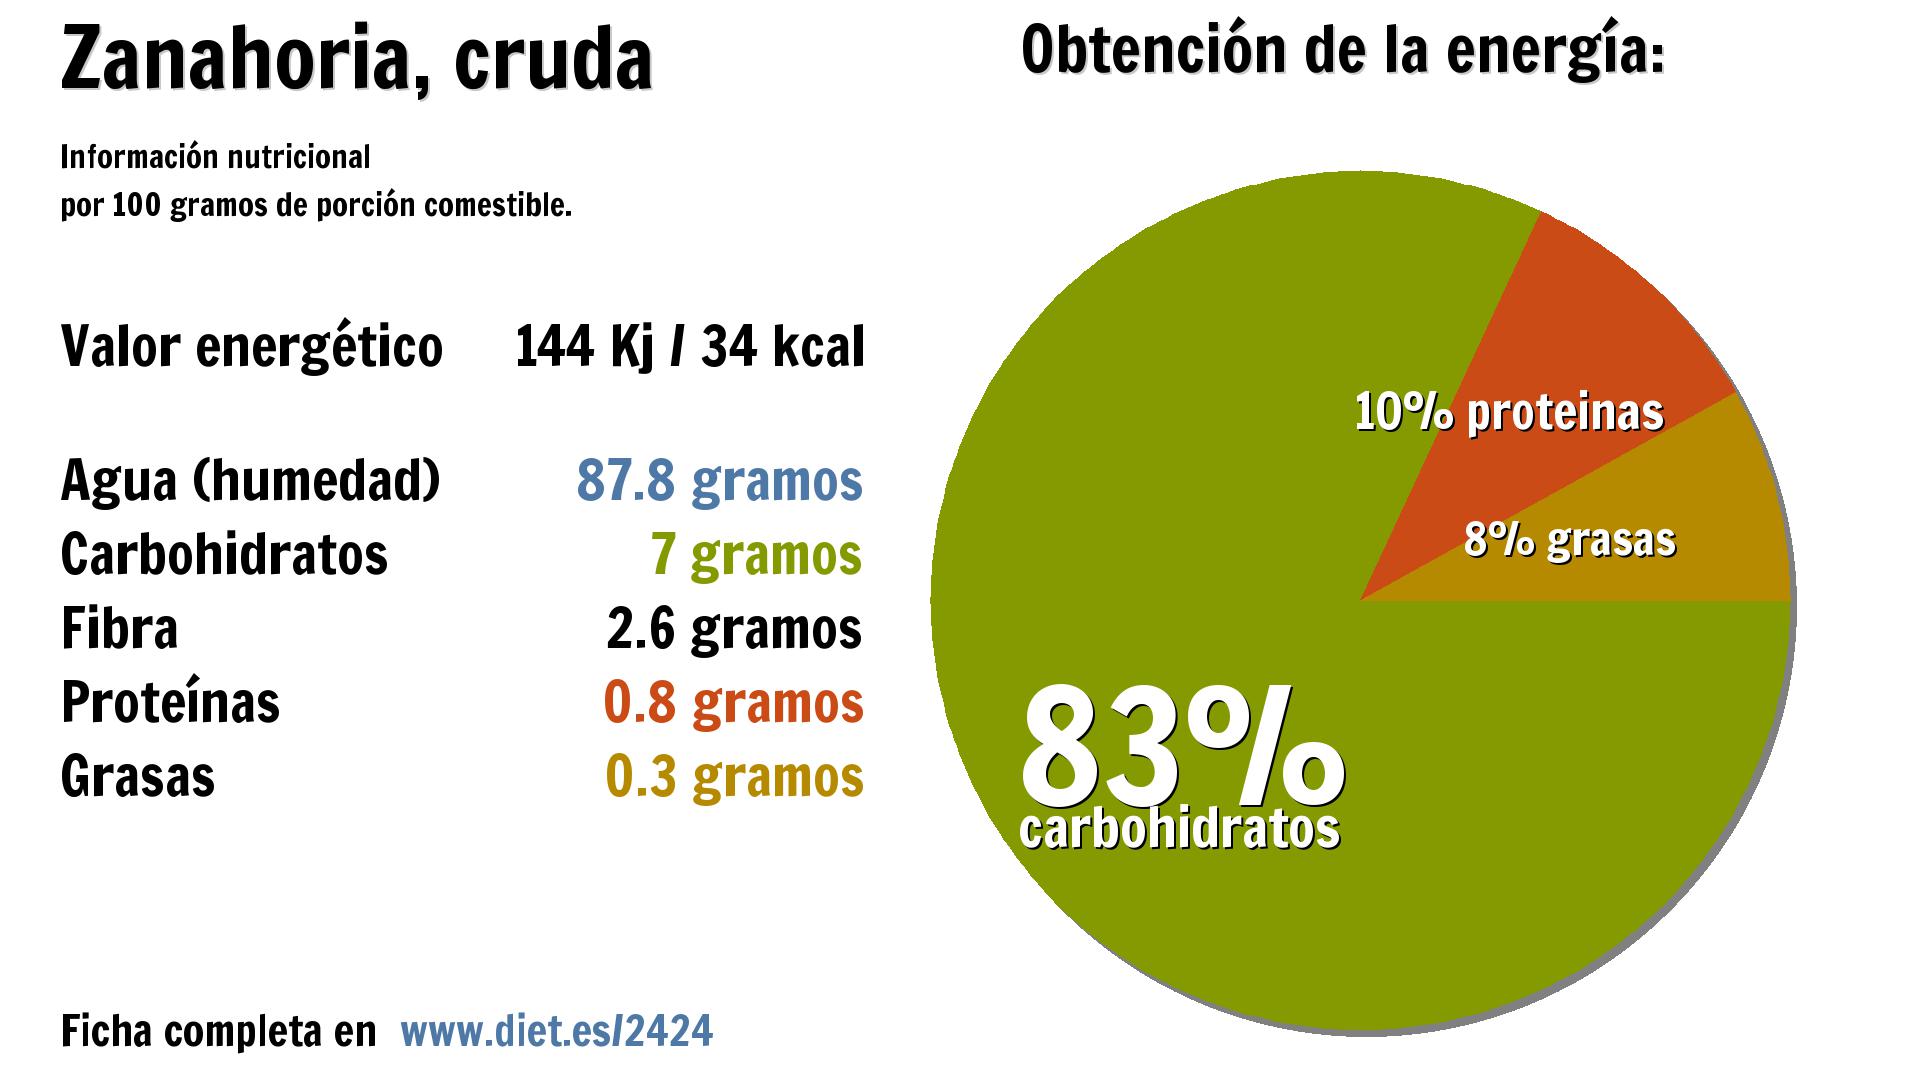 Zanahoria, cruda: energía 144 Kj, agua 88 g., carbohidratos 7 g., fibra 3 g. y proteínas 1 g.